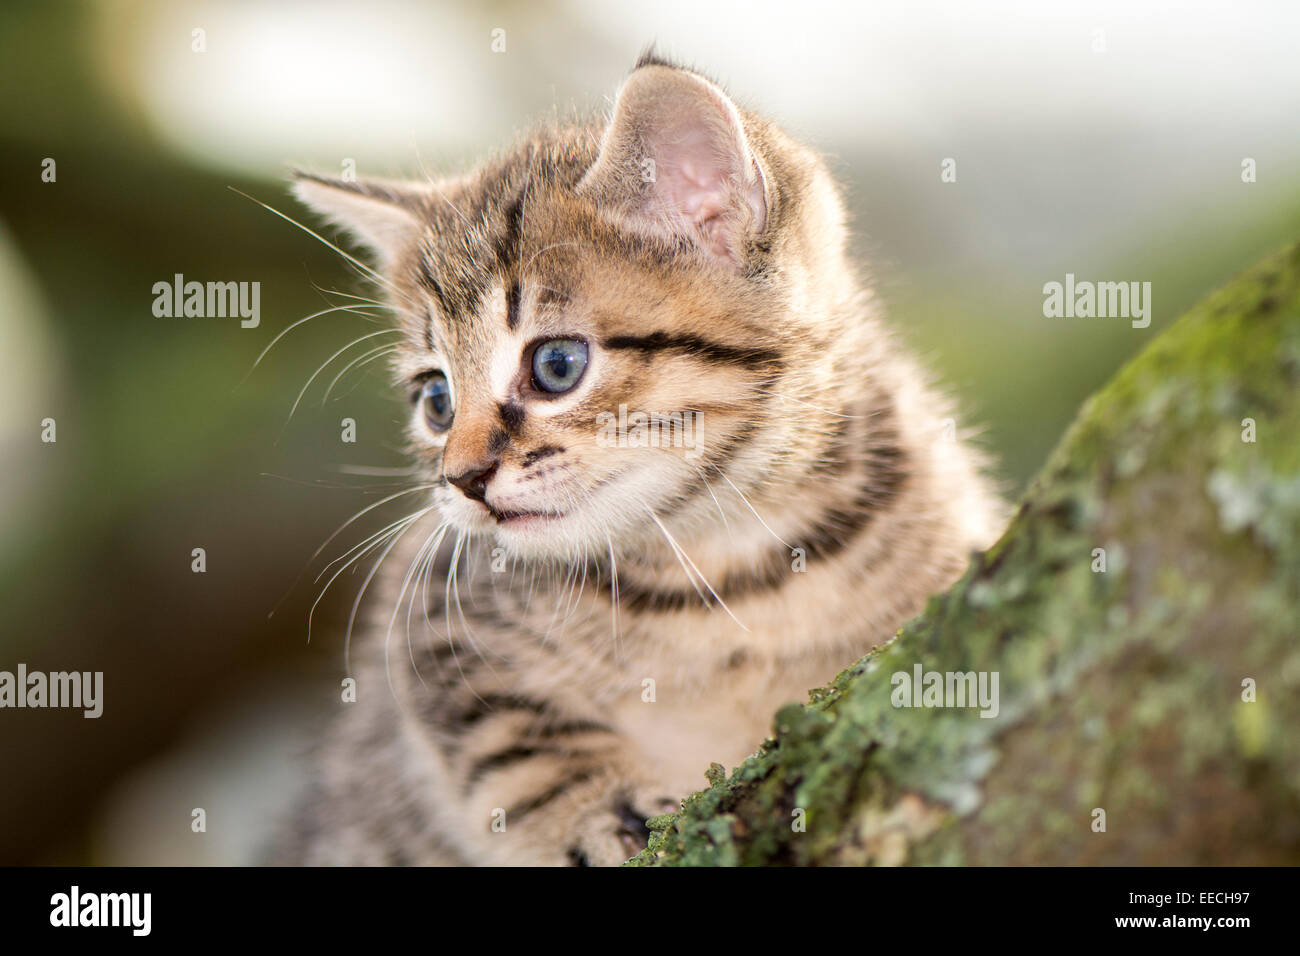 Tabby gattini scalata di un ramo di albero, UK. Foto Stock